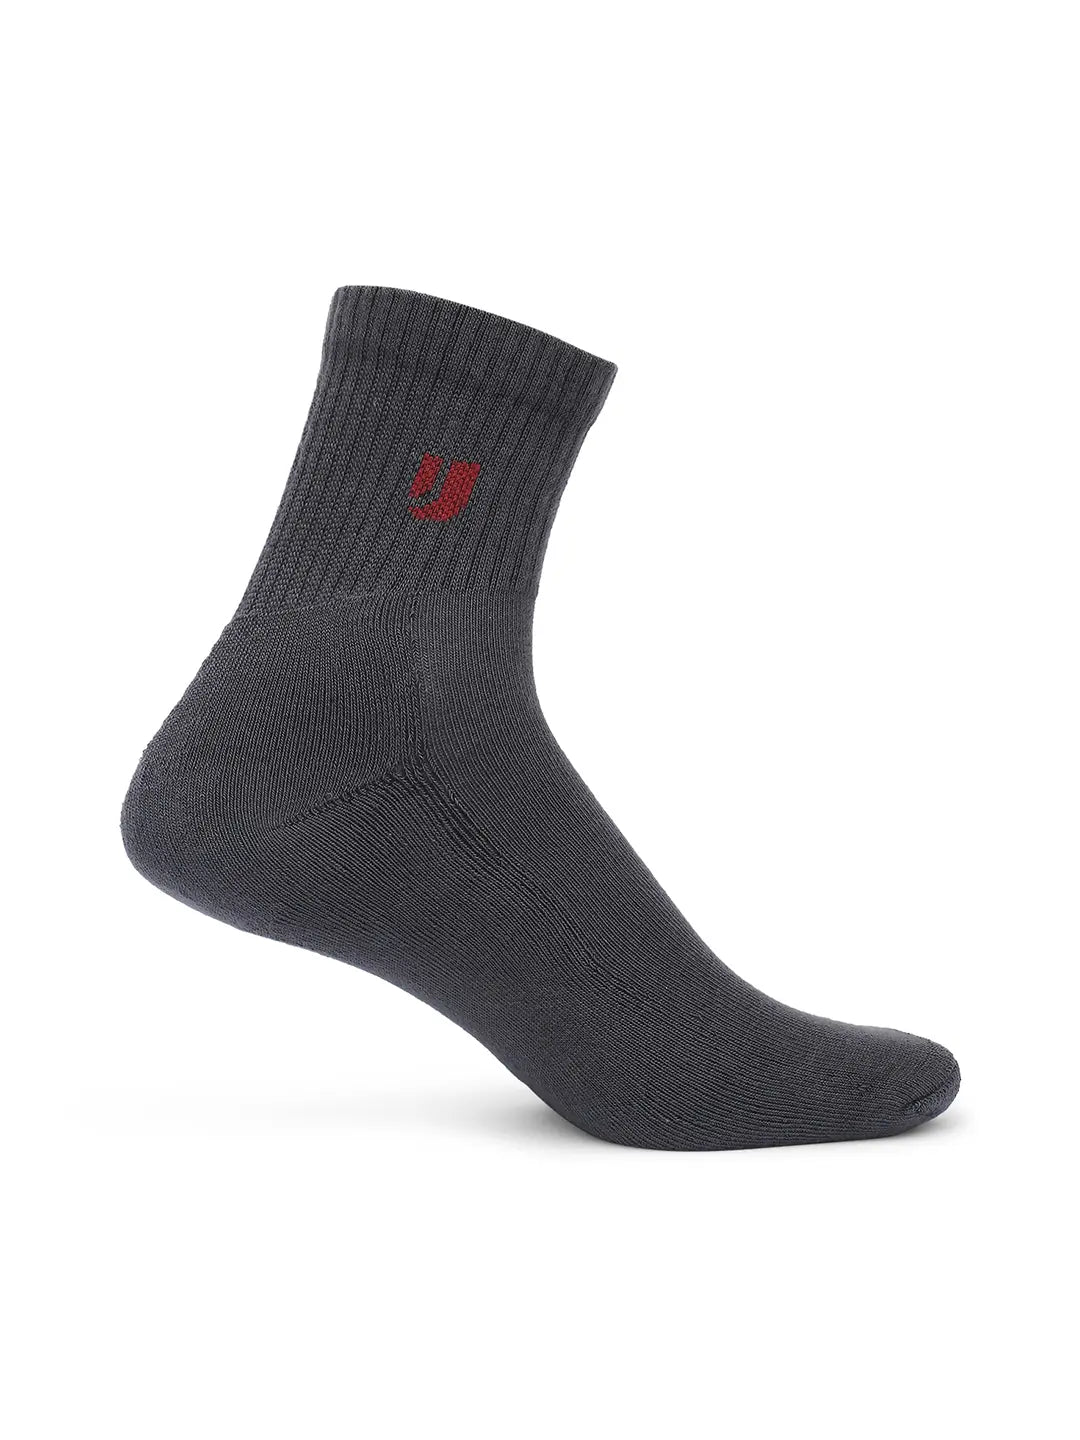 Men Dark Blue & Grey Cotton Blend Ankle Length Socks - Pack Of 2 - Underjeans by Spykar